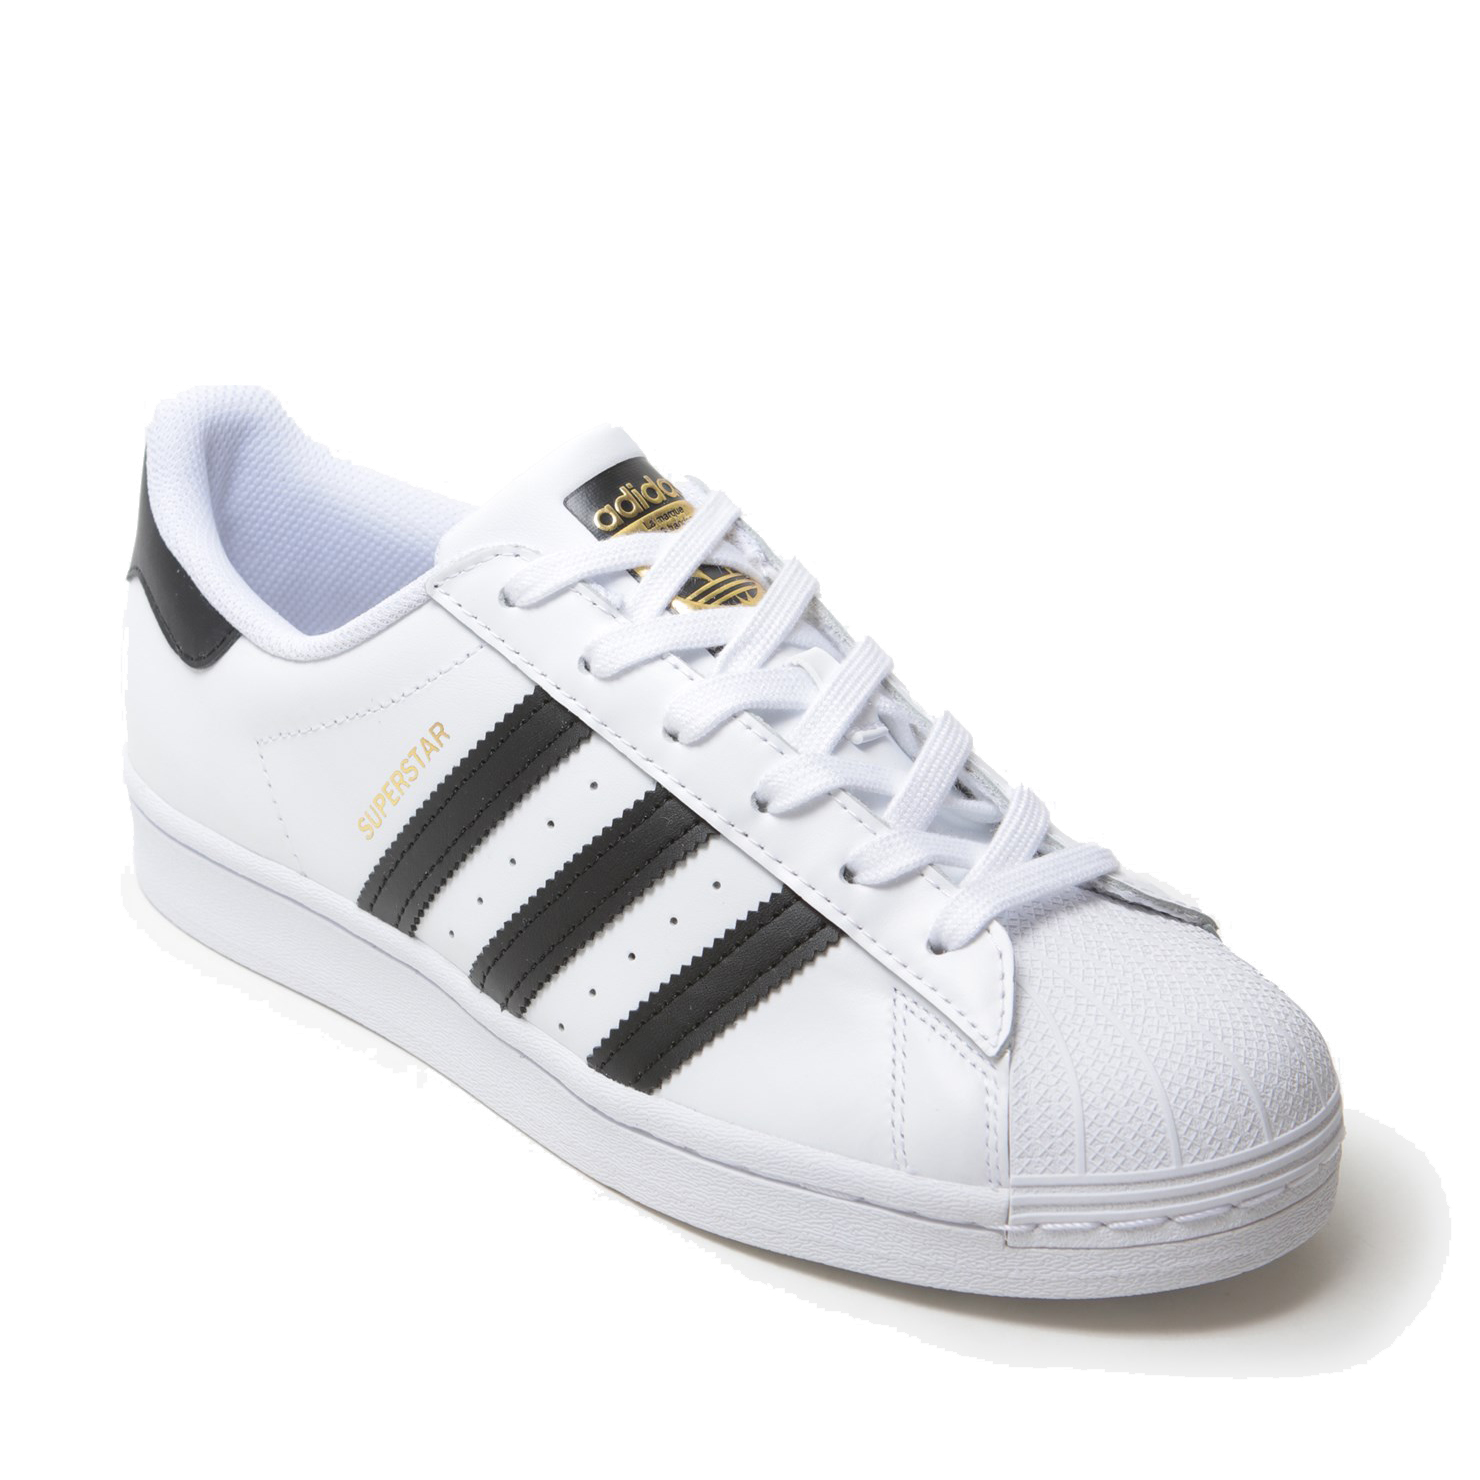 Adidas Superstar Classic White Black